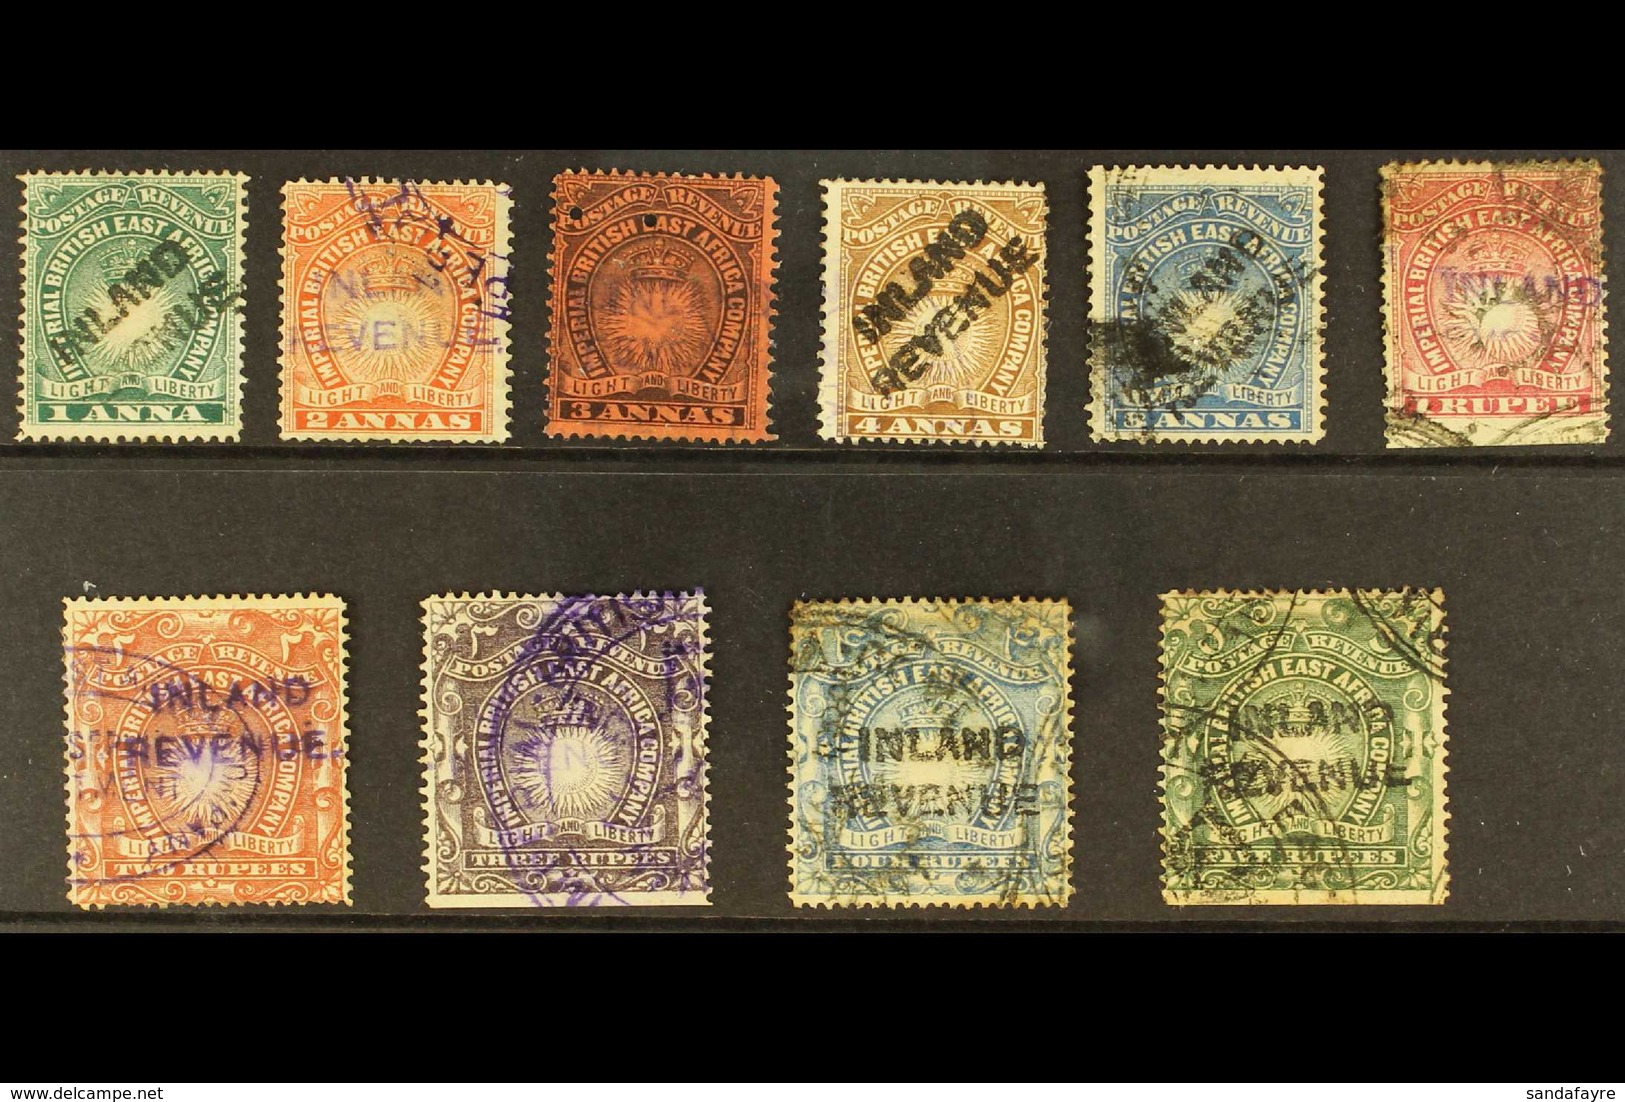 REVENUE STAMPS Circa 1891 Imperial British East Africa Postage Stamps With "INLAND REVENUE" Handstamps - Ten Different V - Britisch-Ostafrika